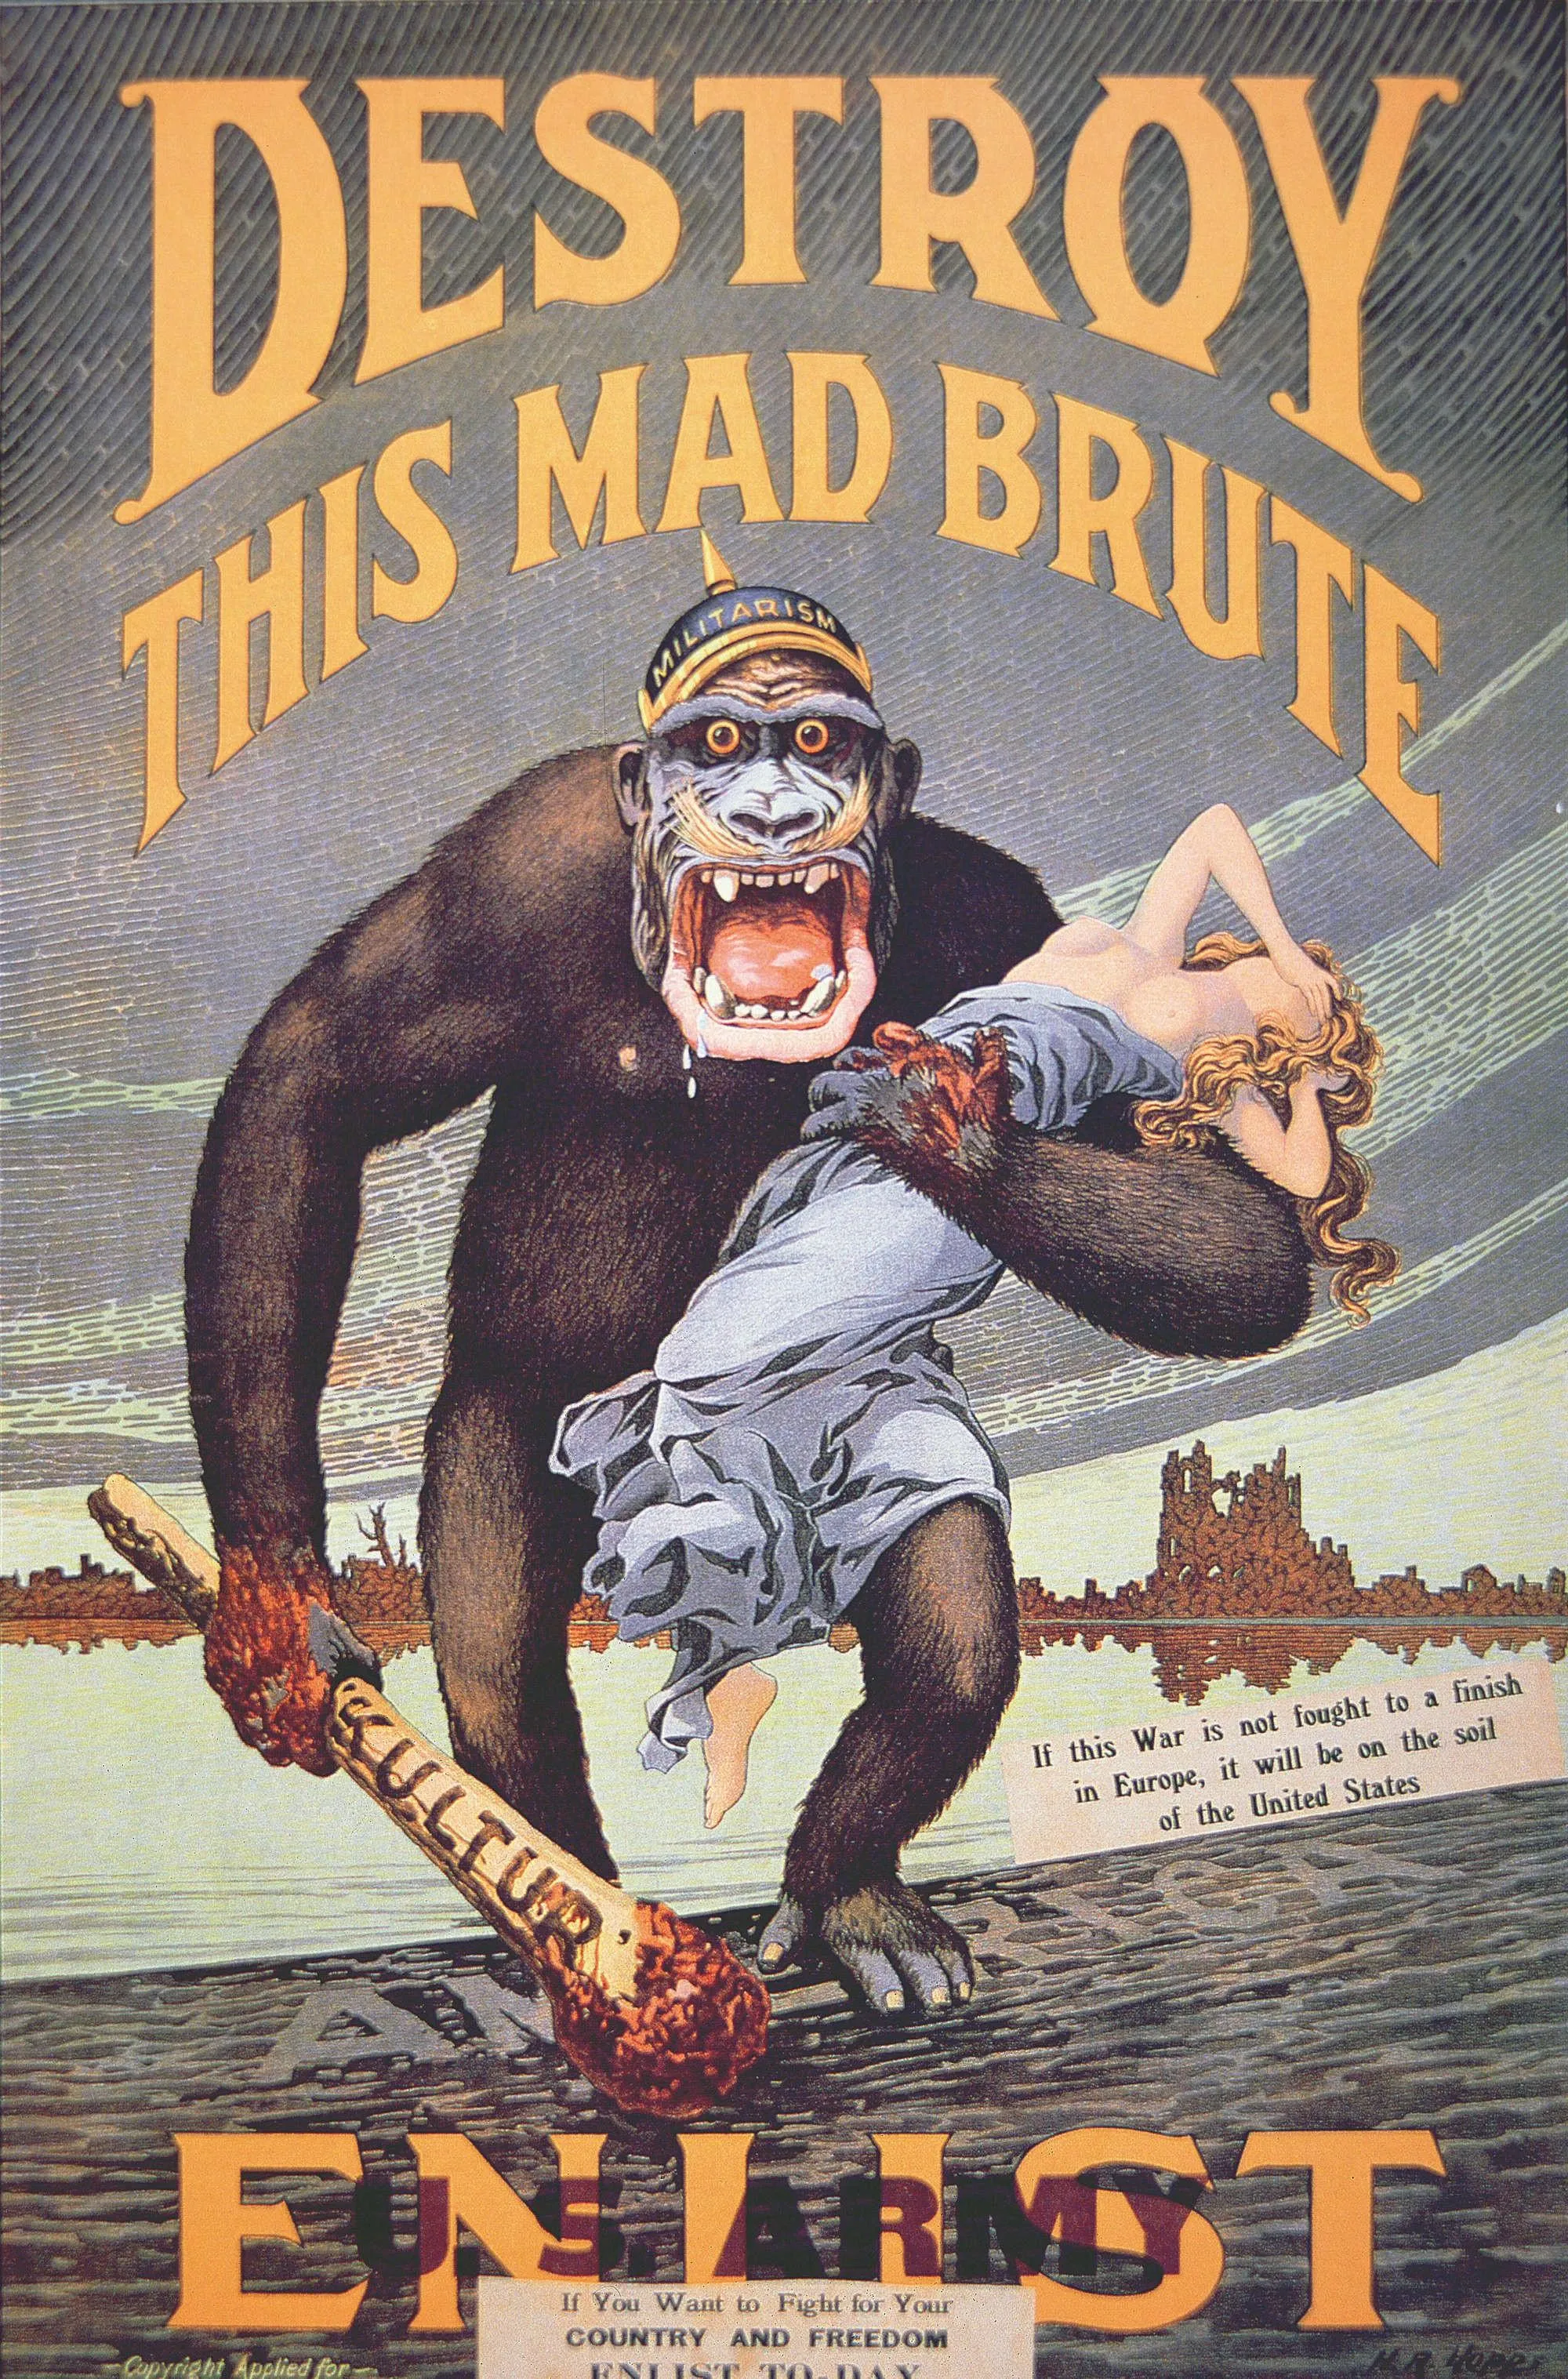 Affiche de propagande